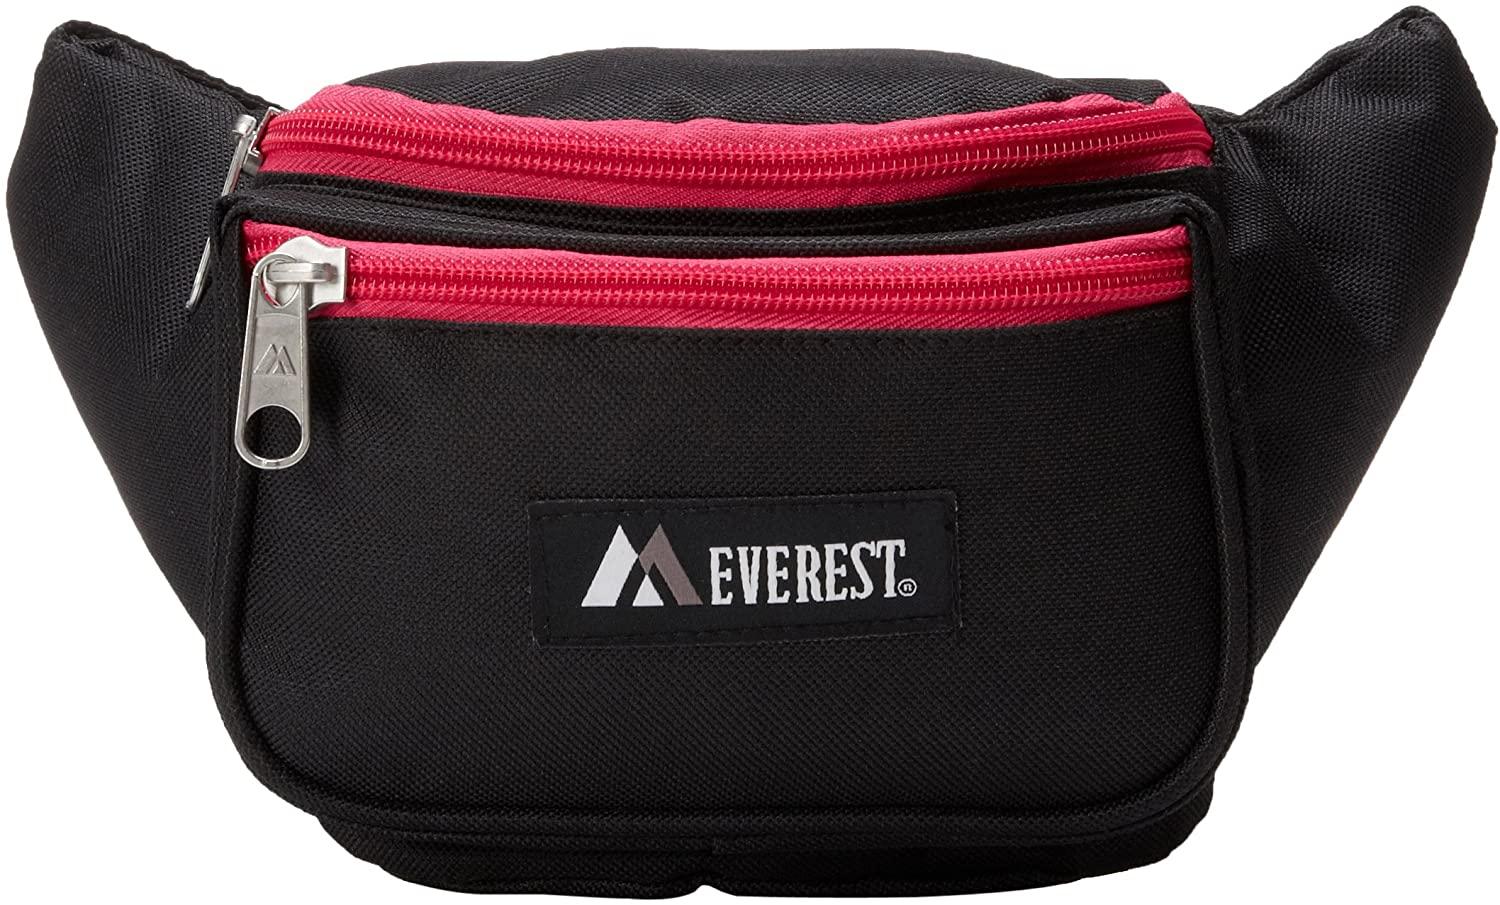 Everest Signature Waist Pack for $3.99